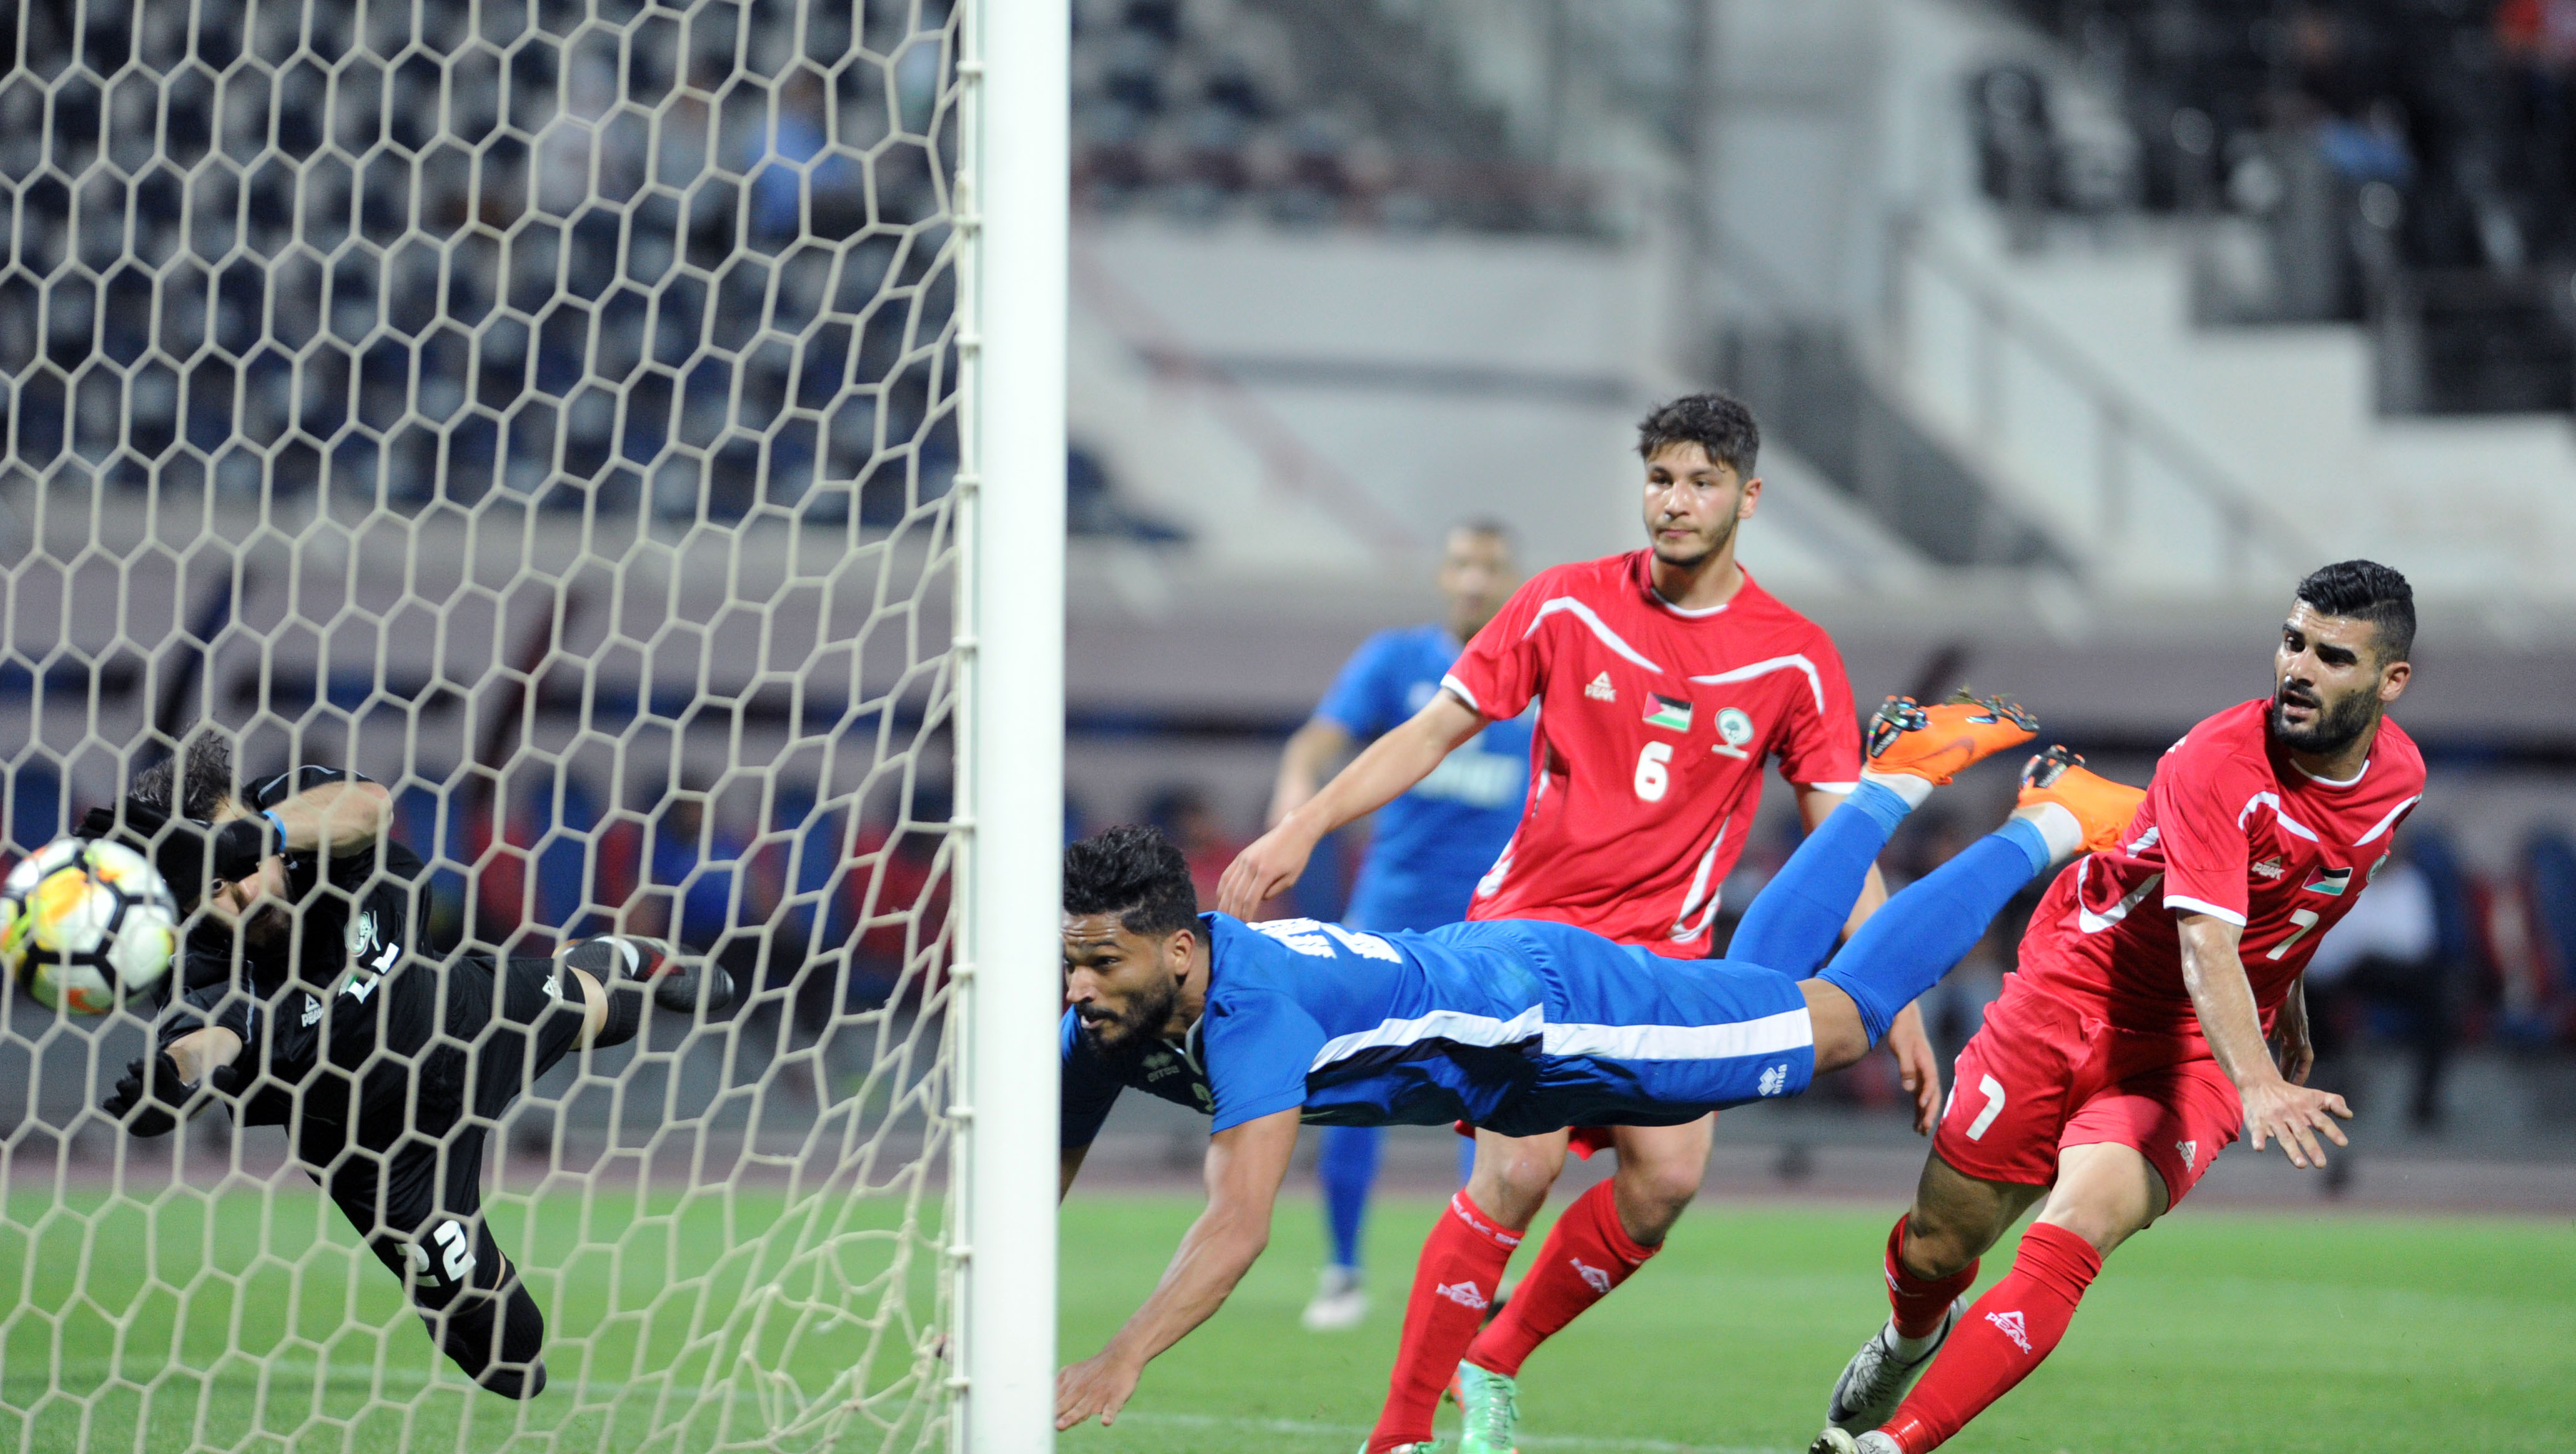 Kuwait national football team beat Palestine 2-0 in an international friendly